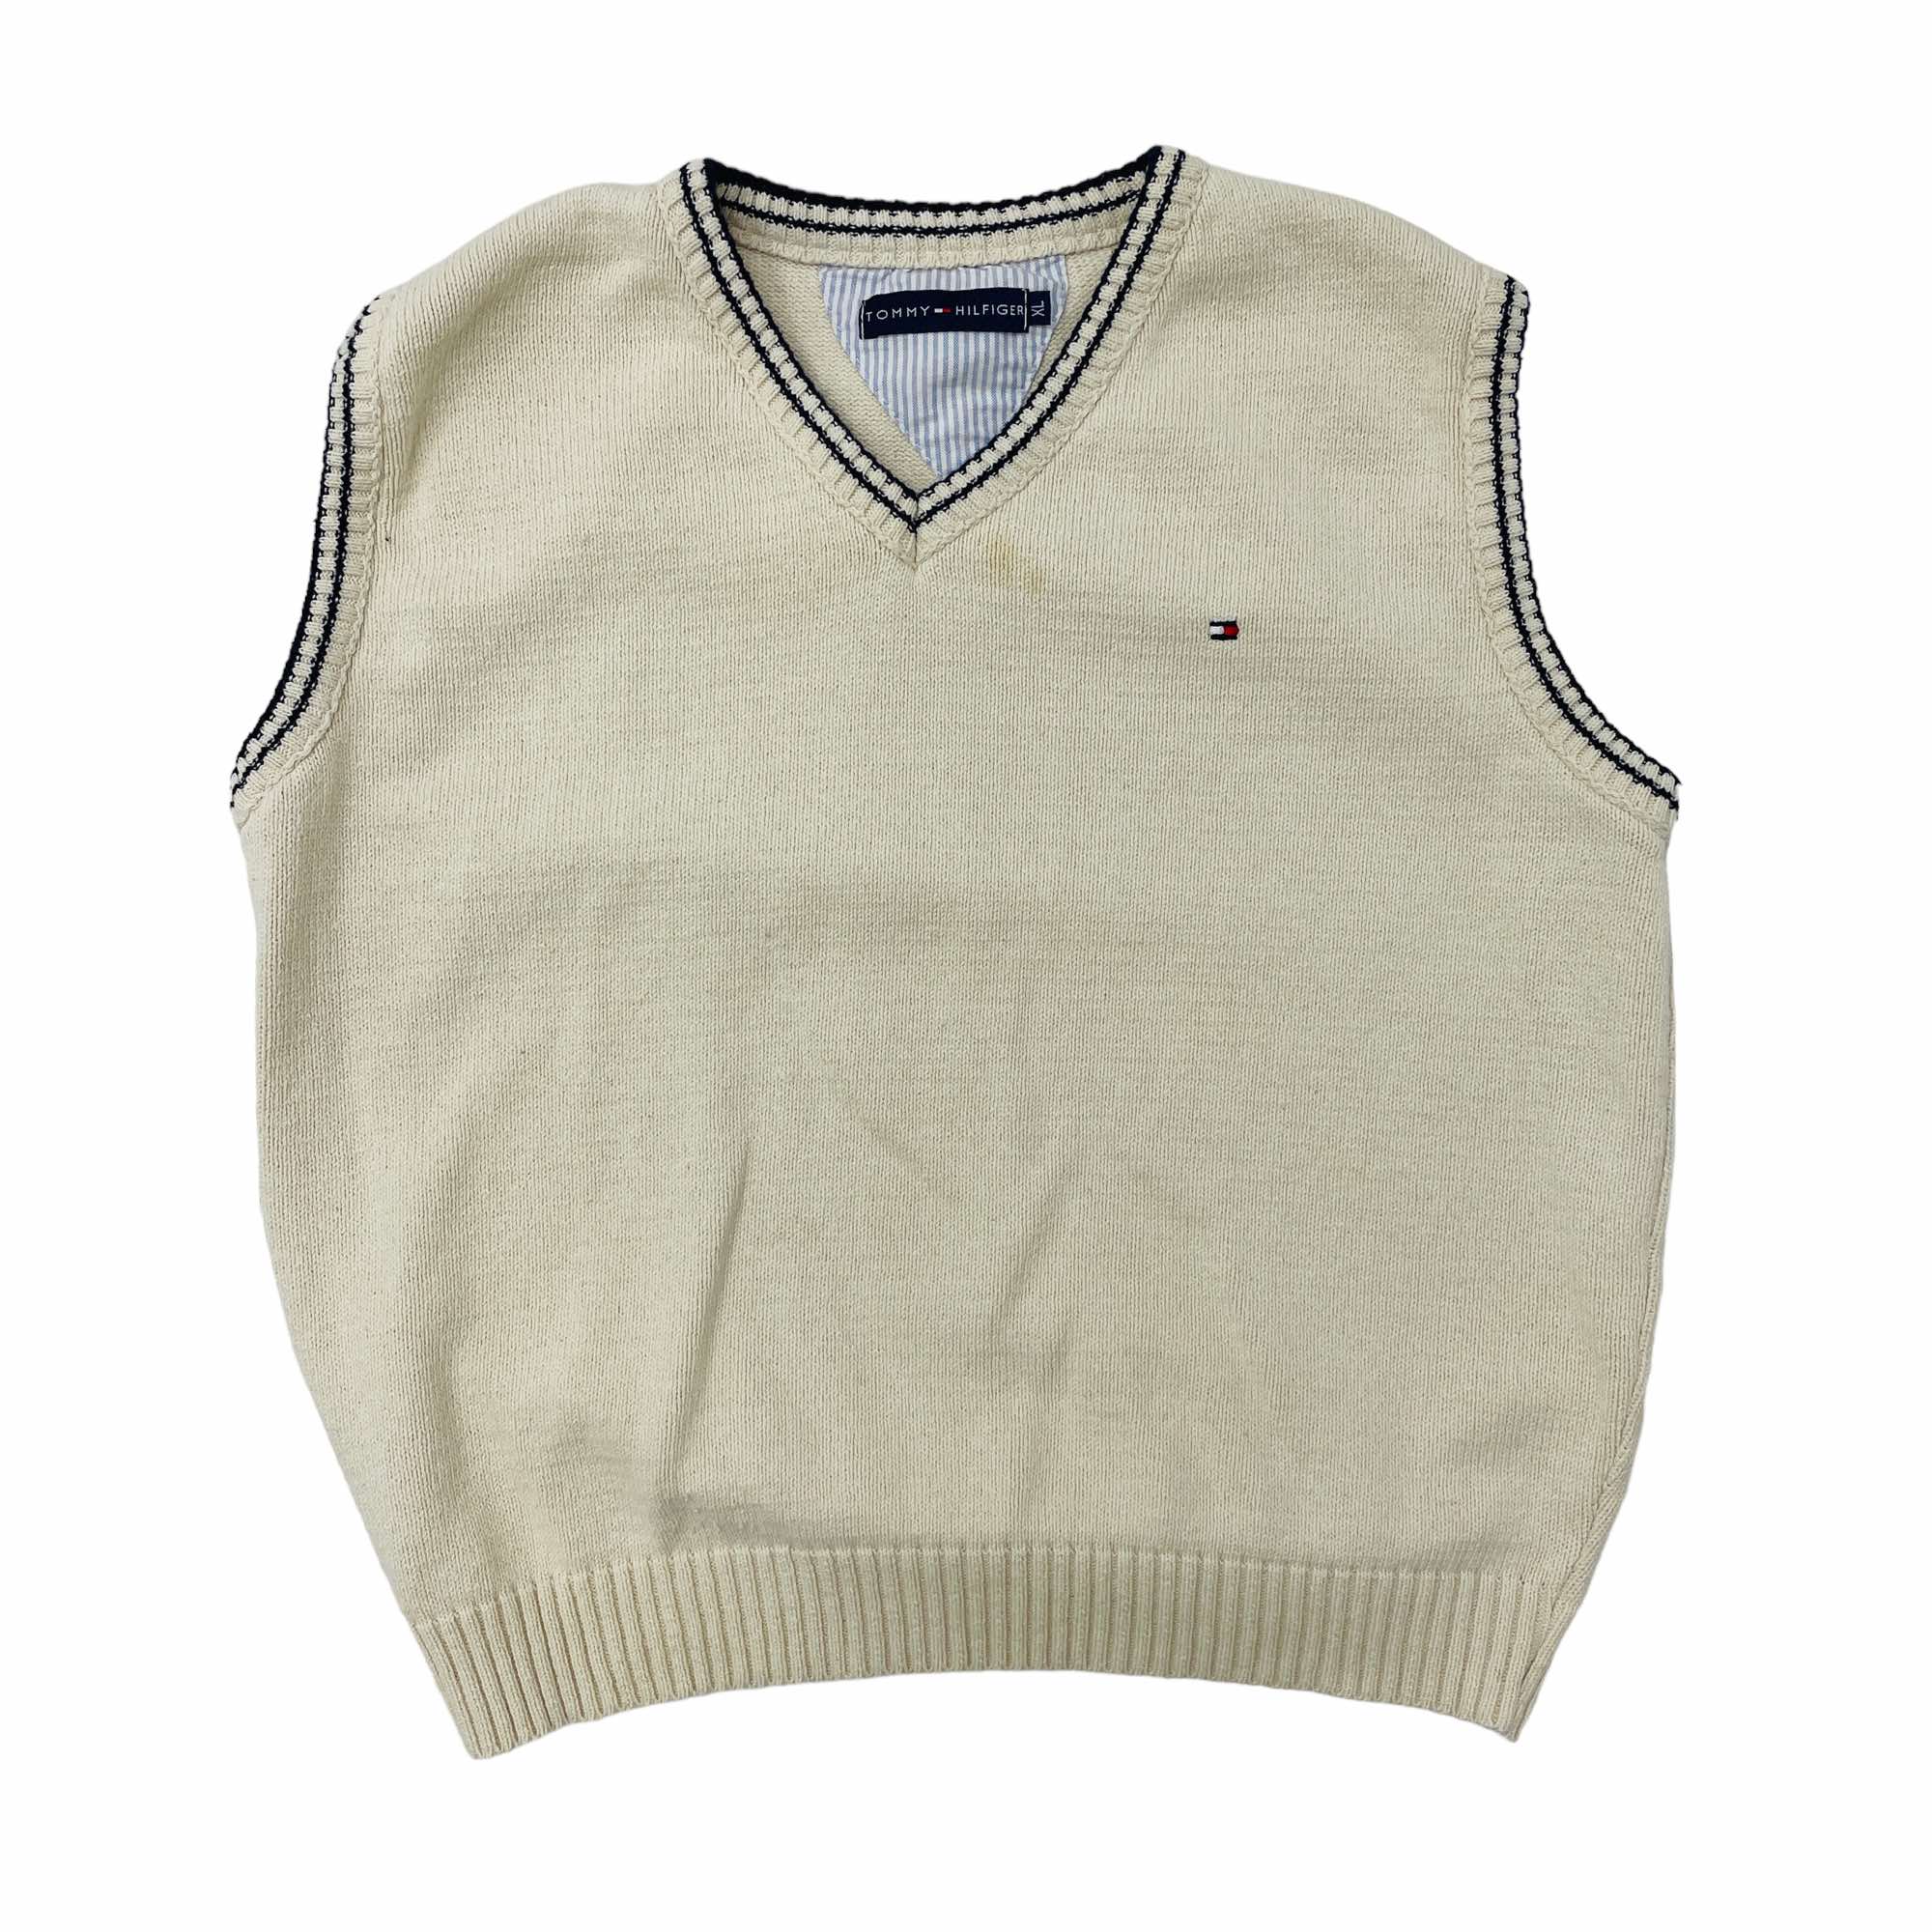 Tommy Hilfiger Knitted Vest - XL